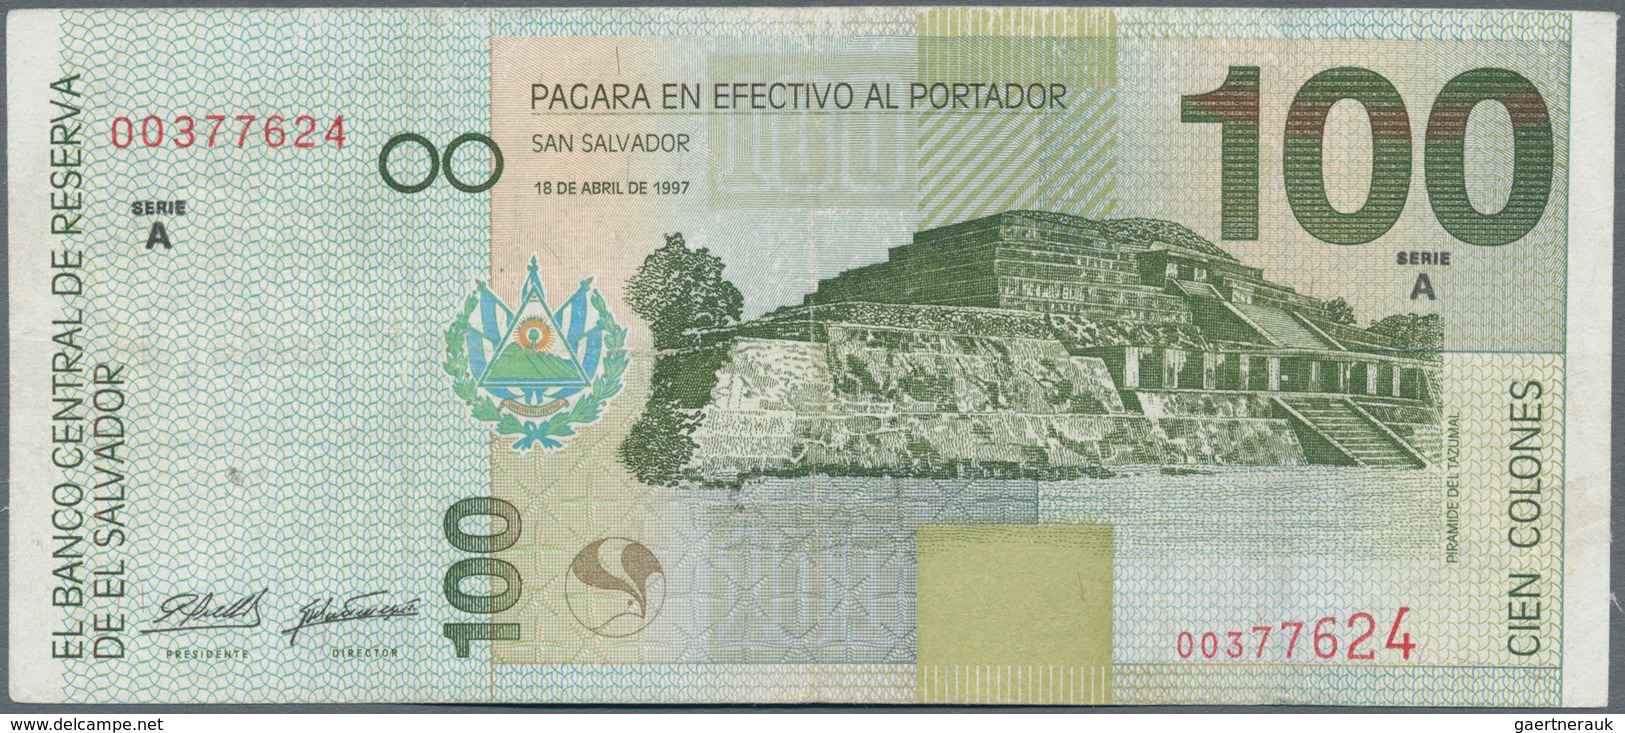 El Salvador: Pair With 100 Colones 1997 P.151a (F+) And 200 Colones 1998 P.152a (F With Small Tear). - Salvador